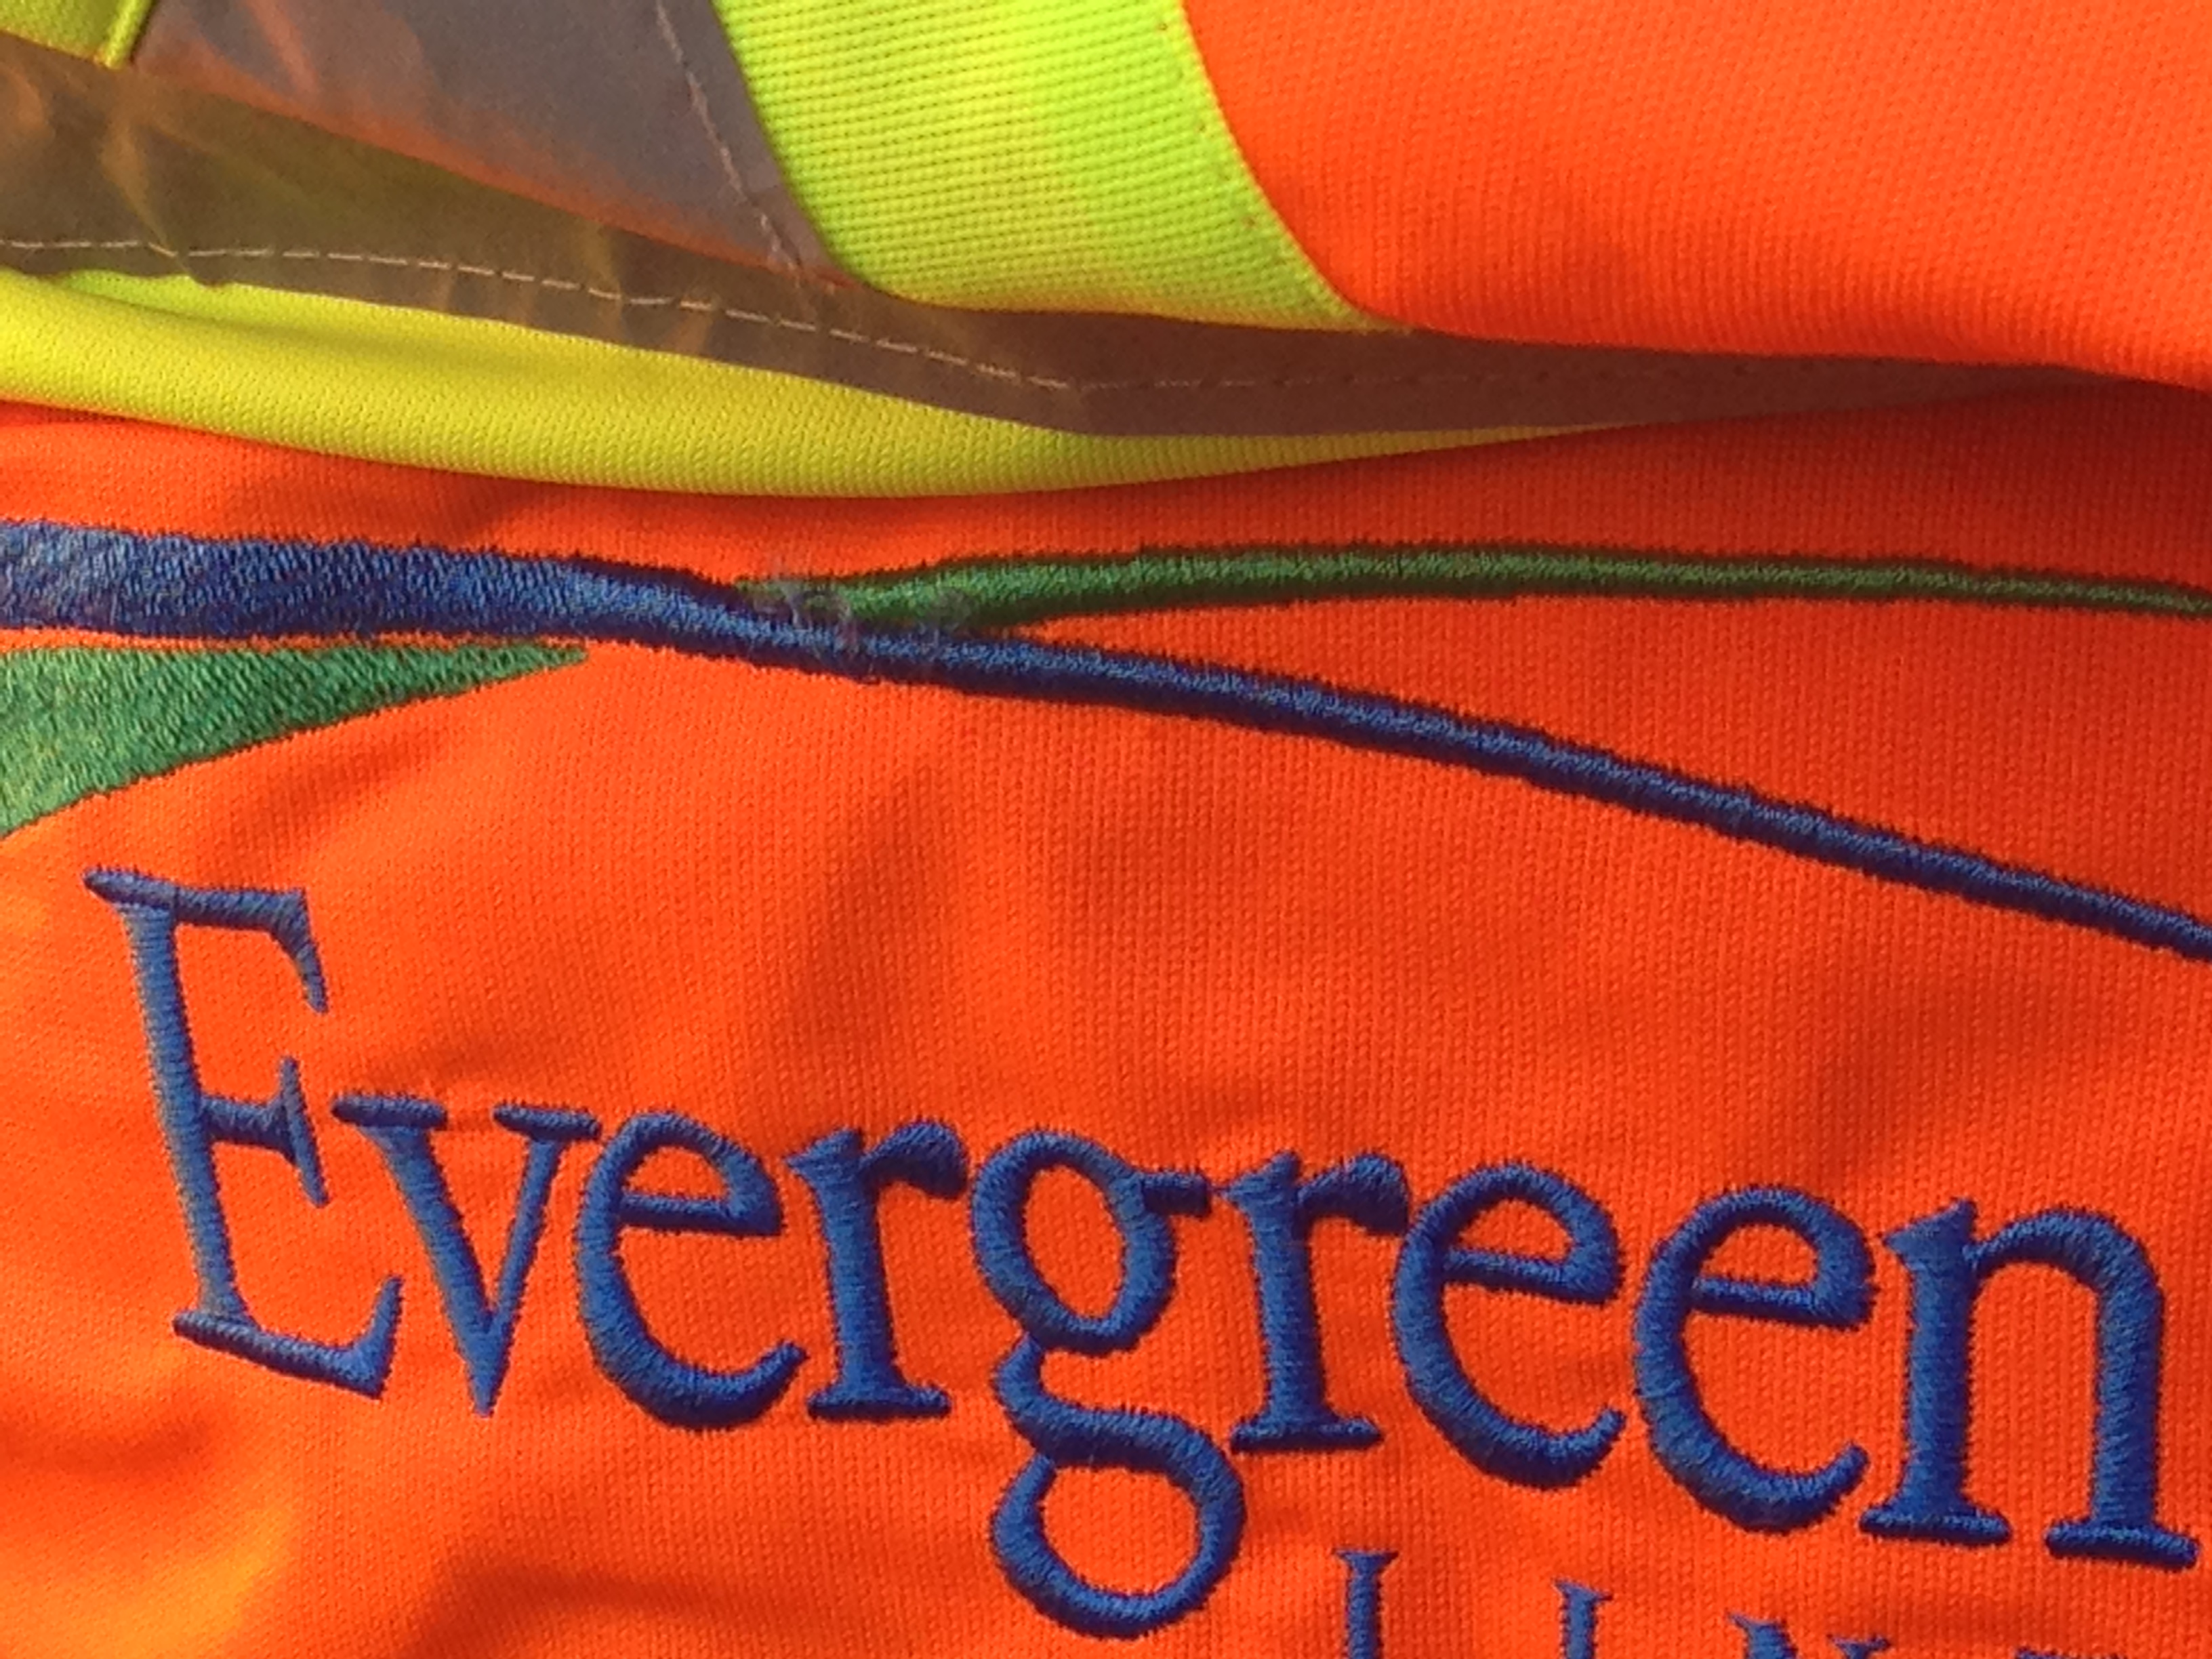 Evergreen vest!